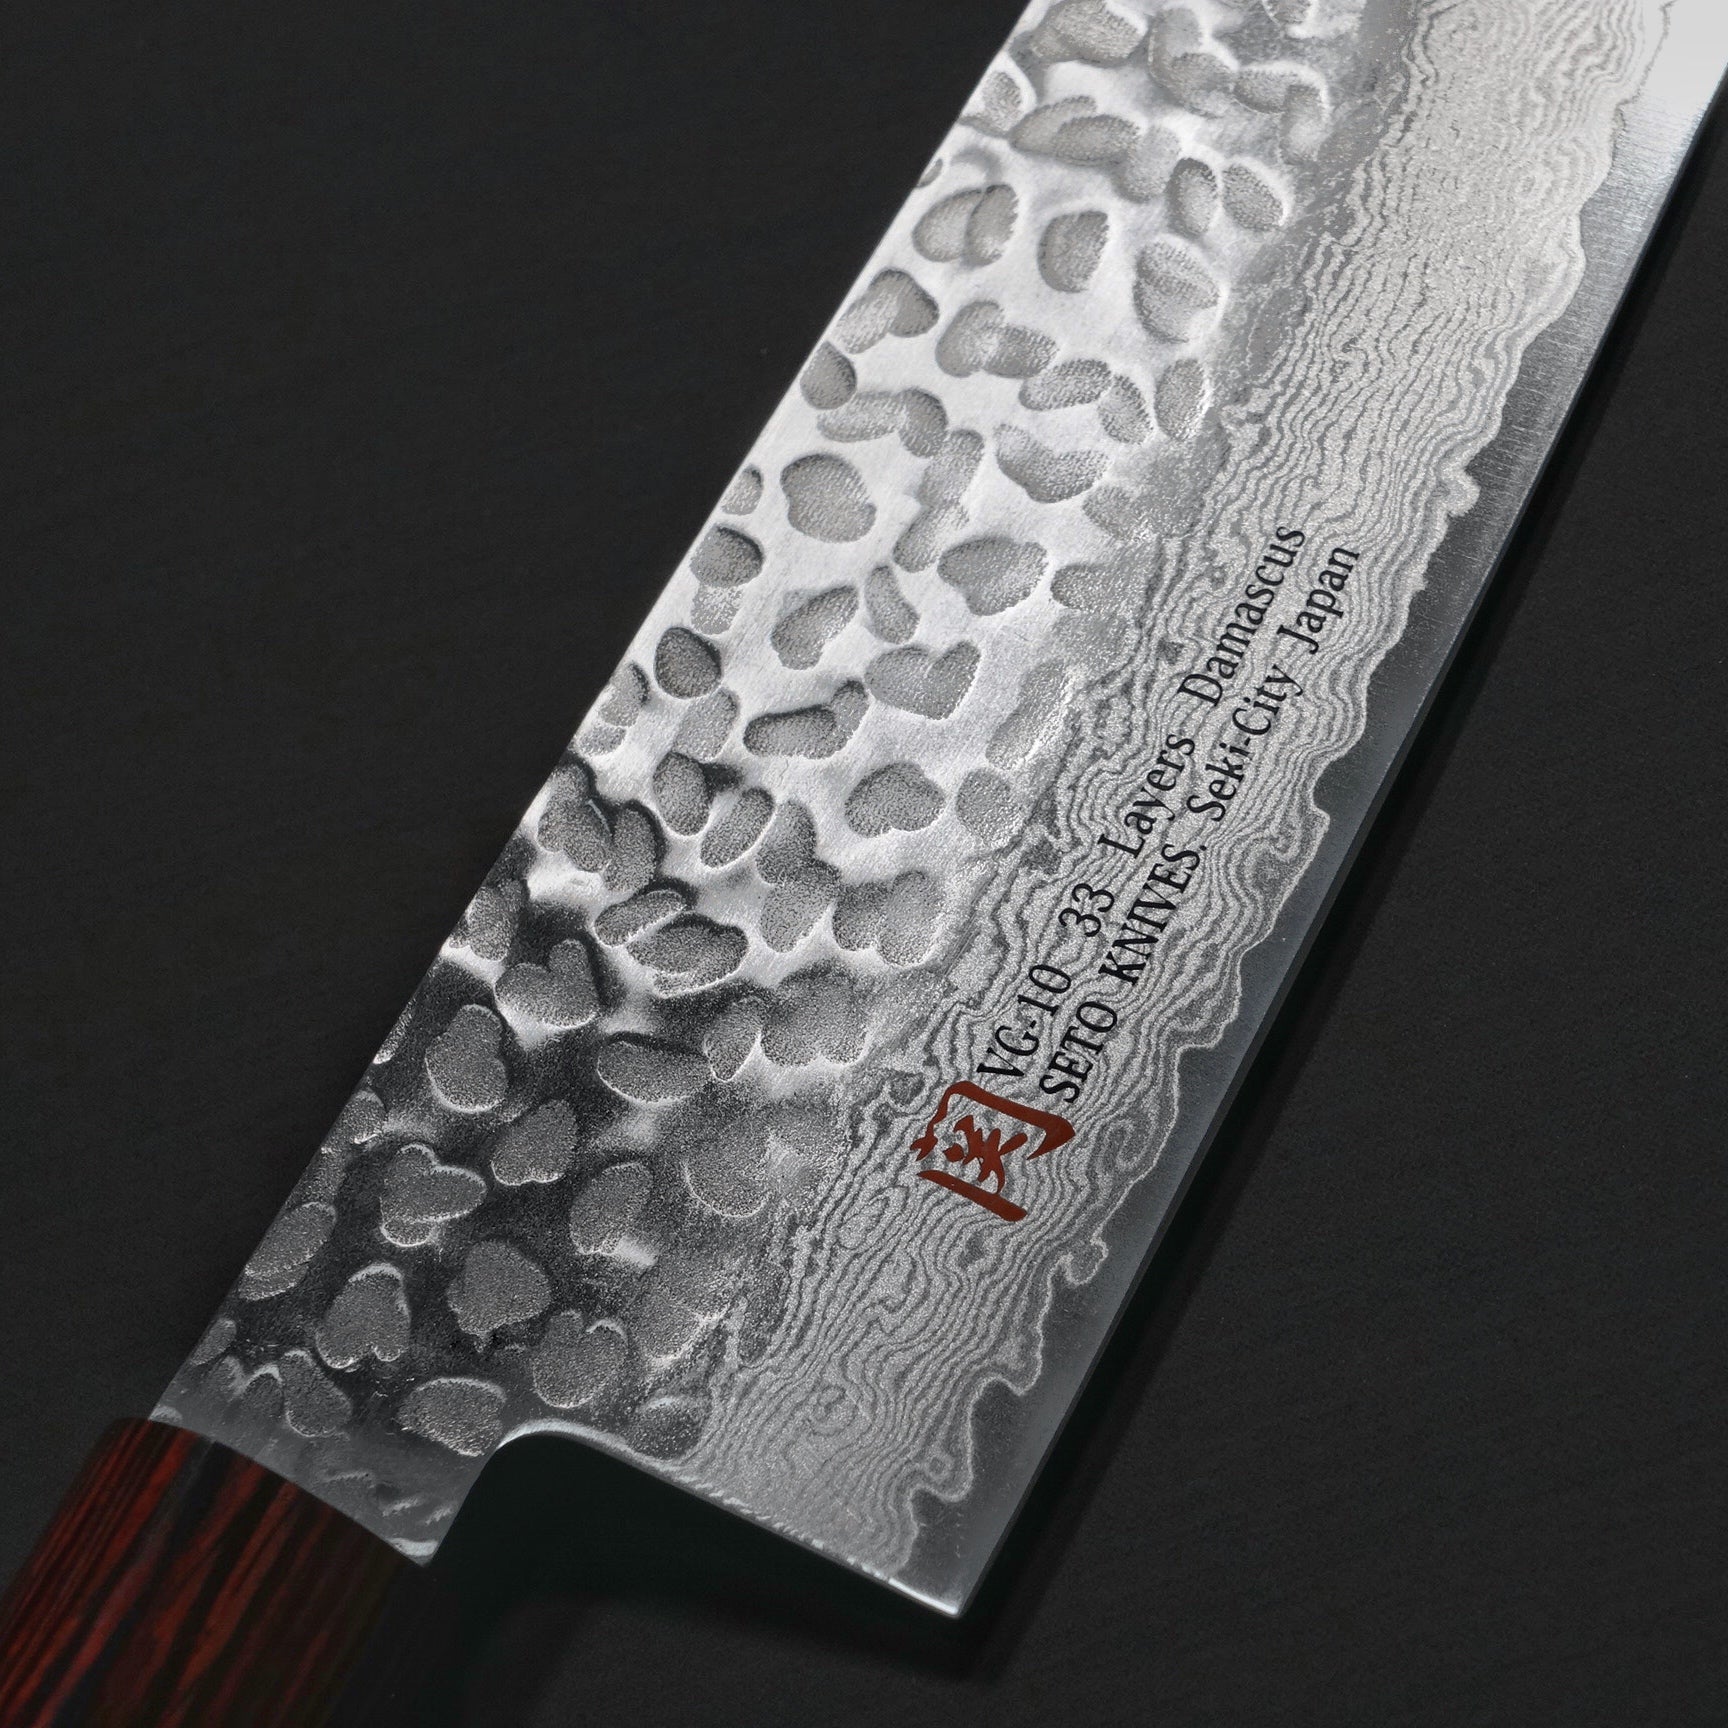 Iseya I-Series 33 Layer VG-10 Damascus Hammered Japanese Chef's Knife Set (Gyuto - Santoku - Vegetable Knife(Nakiri) - Yanagiba - Small Santoku 